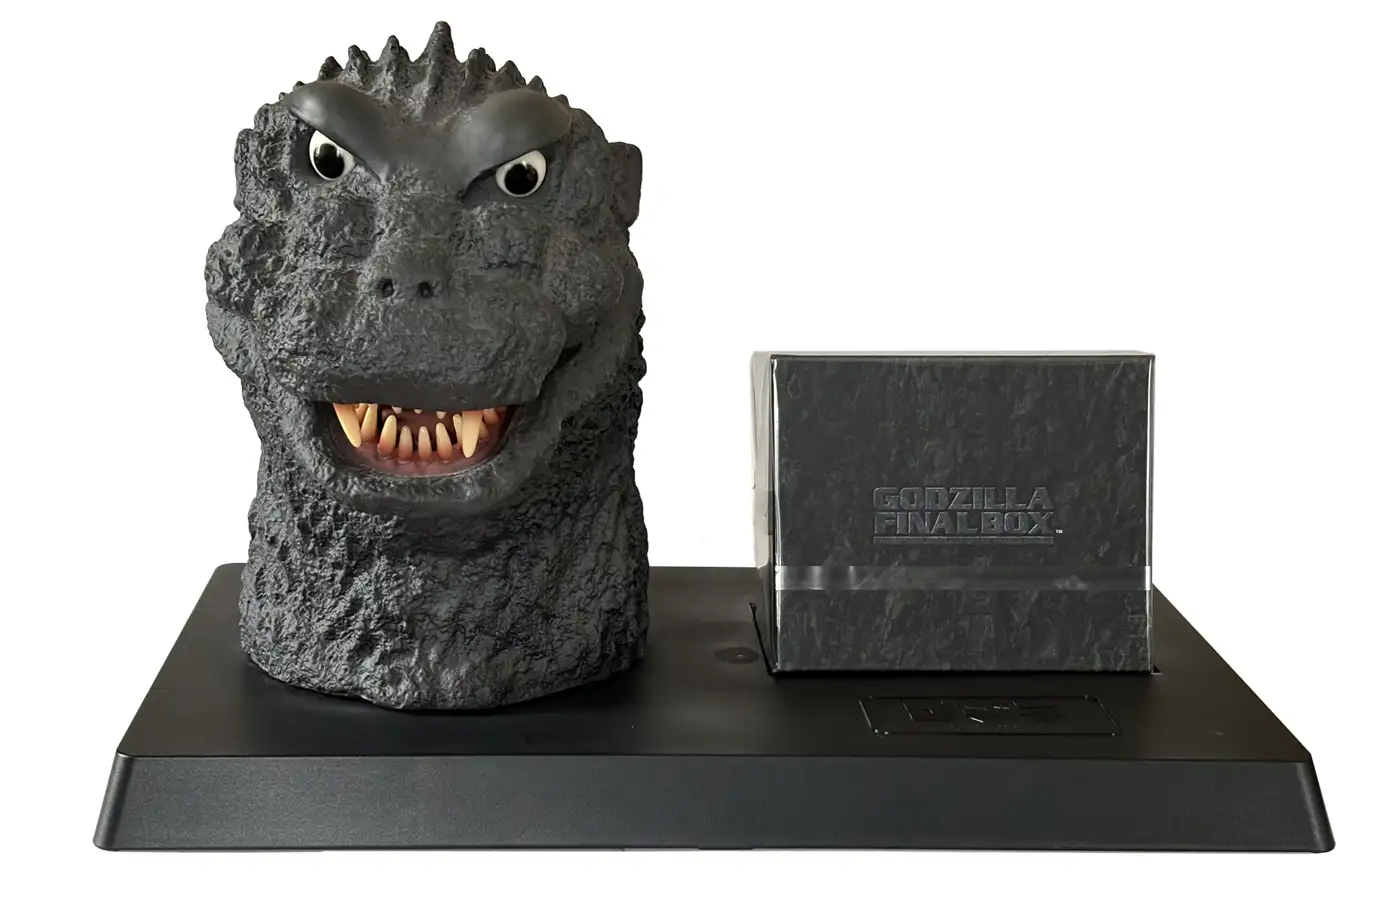 My GODZILLA FINAL BOX with Godzilla Head and DVDs on the base